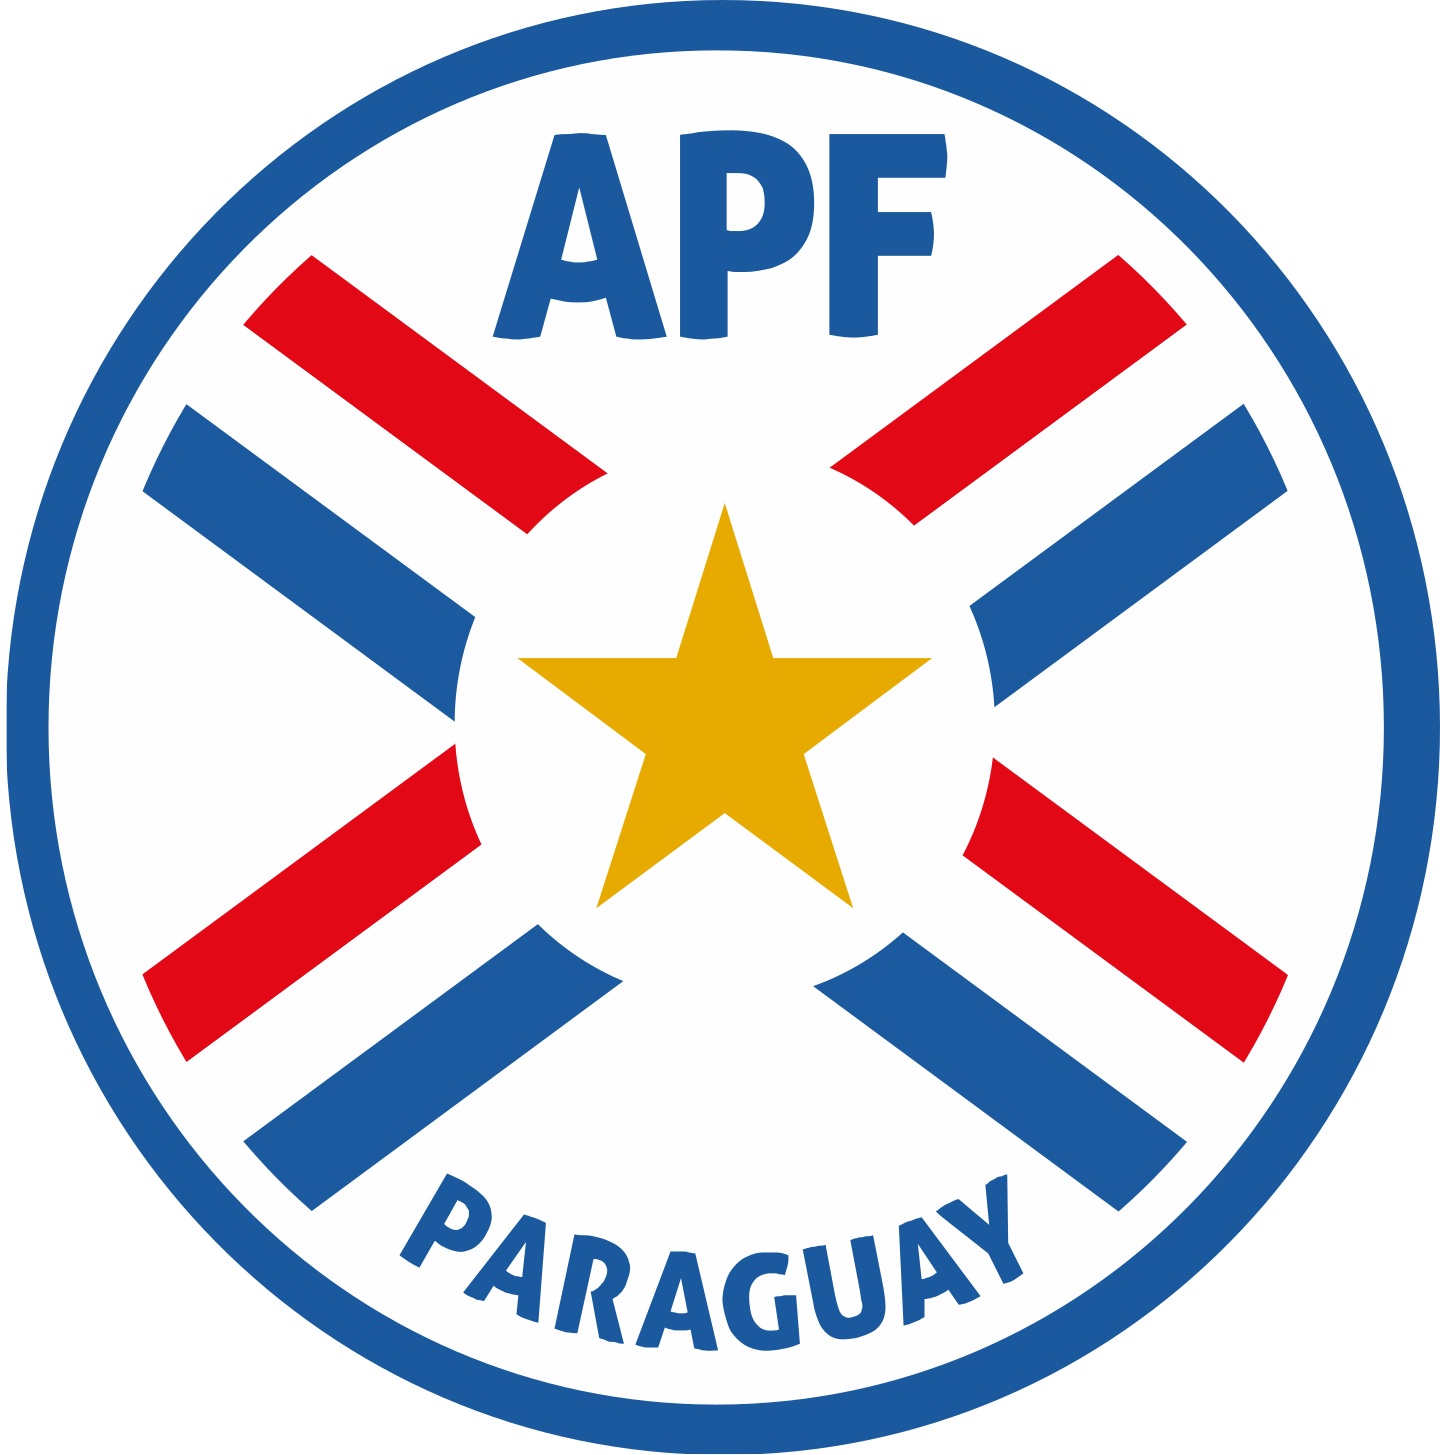 apf seleccion de futbol de paraguay logo 2 - APF Logo - Selección de Fútbol de Paraguay Logo